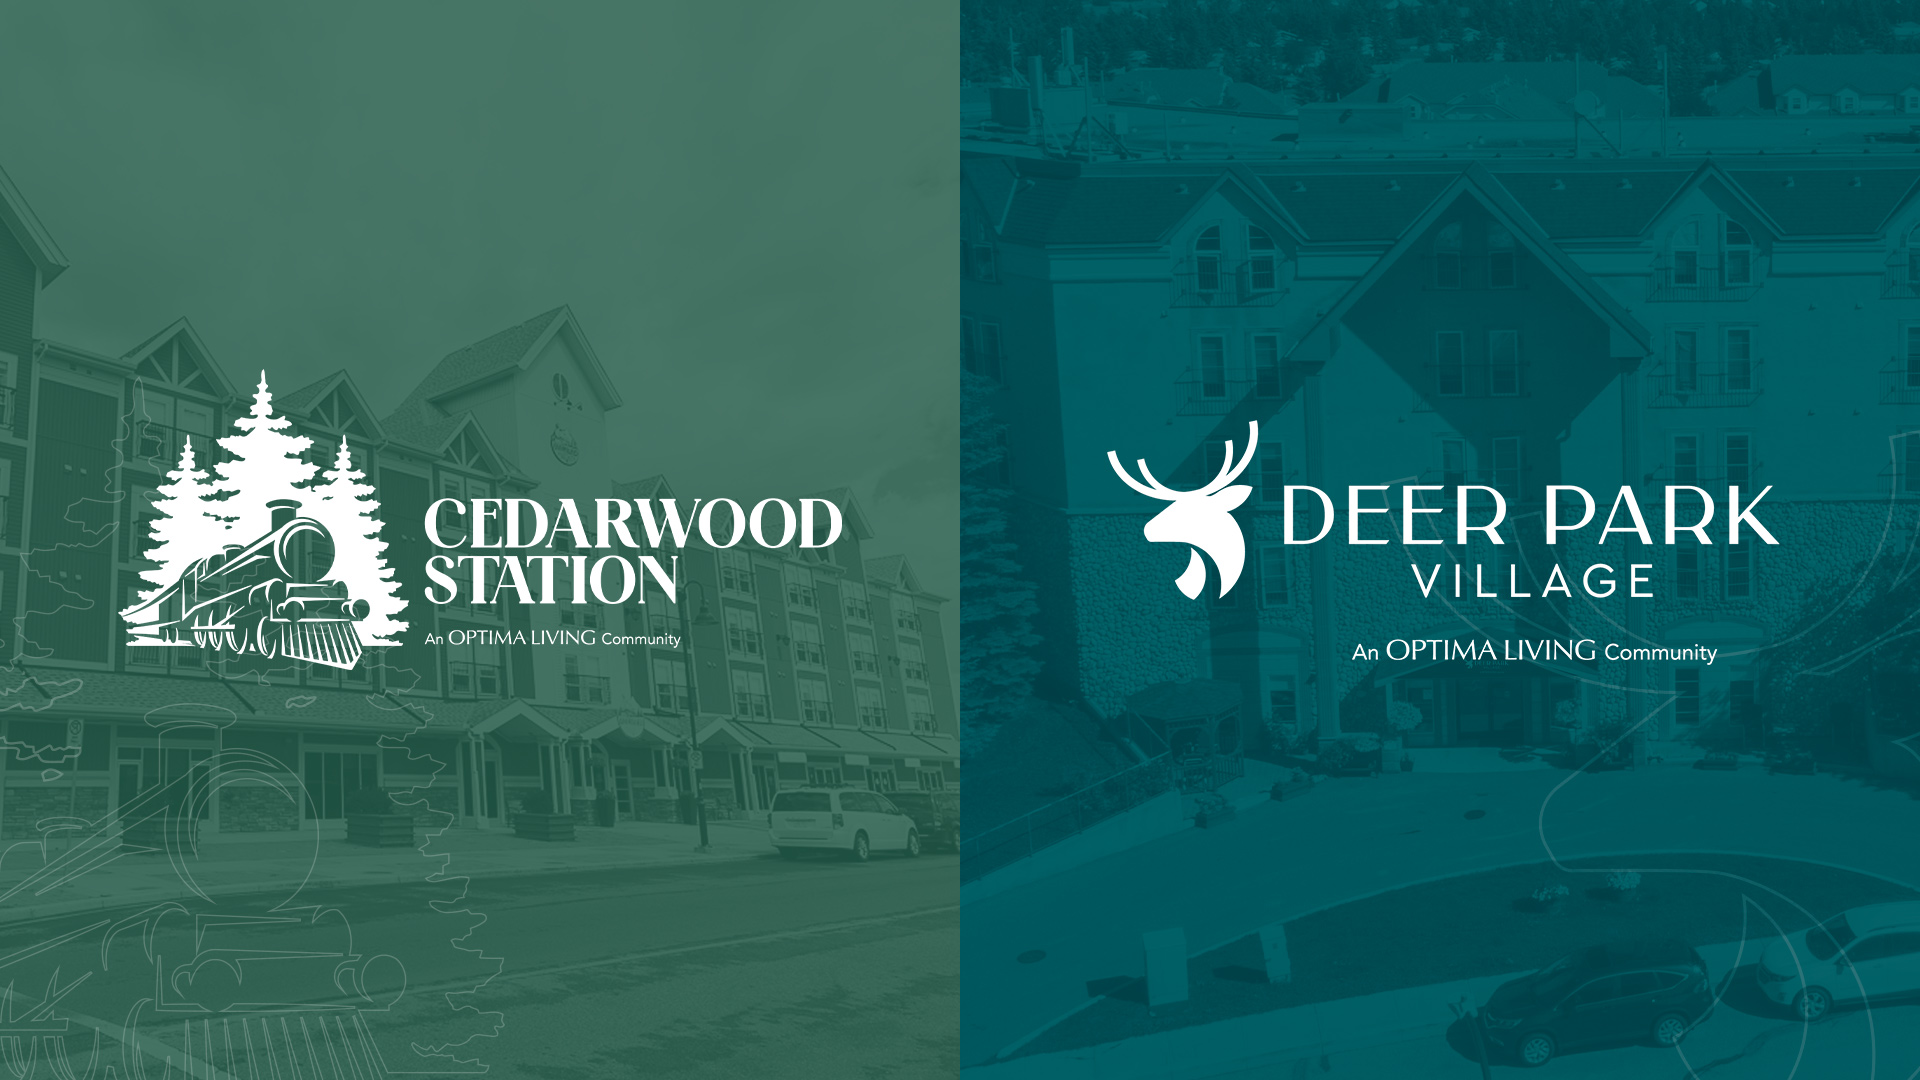 The logos of Cedarwood Station and Deer Park Village residences